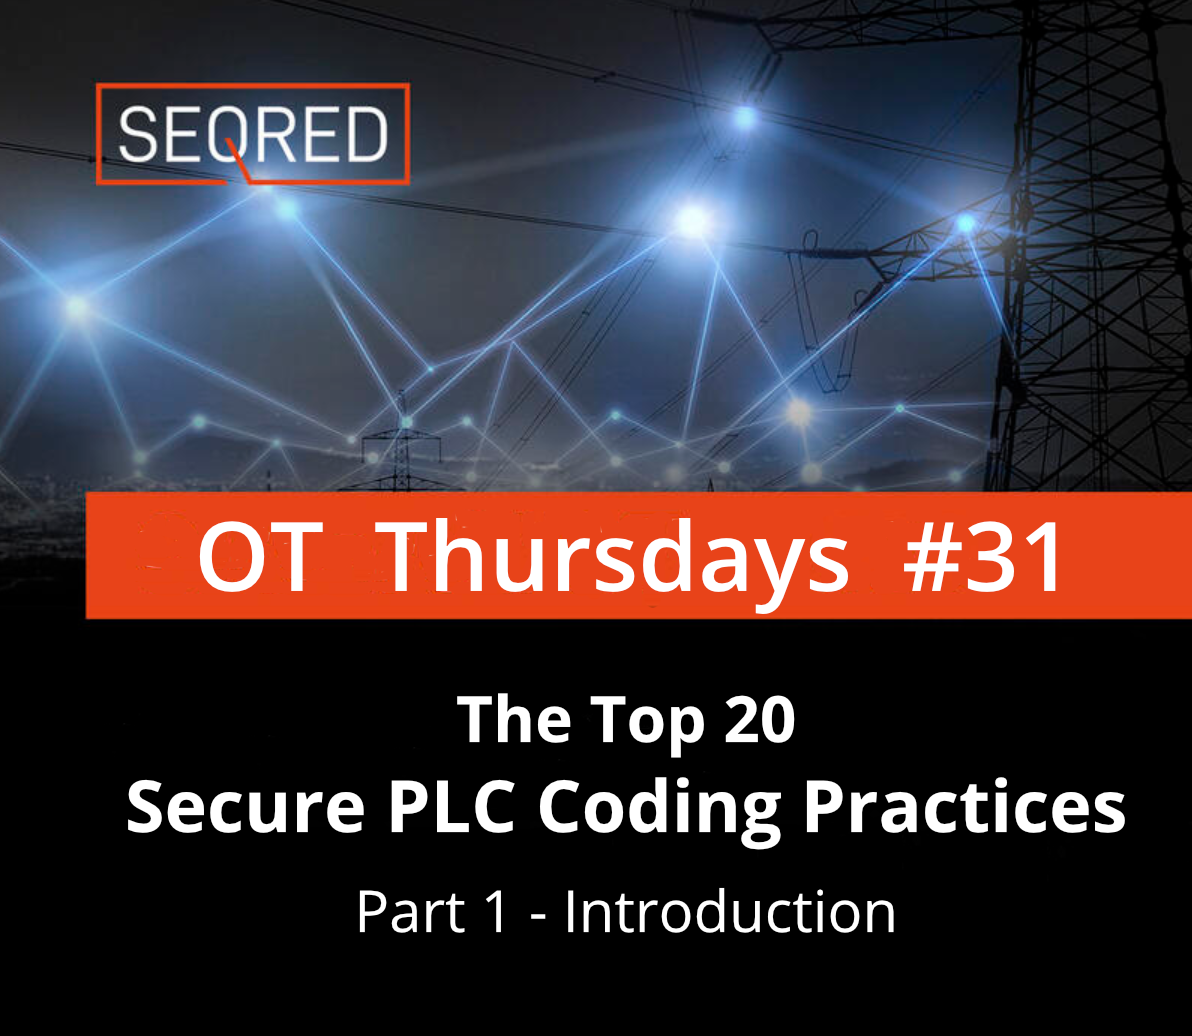 The Top 20 Secure PLC Coding Practices